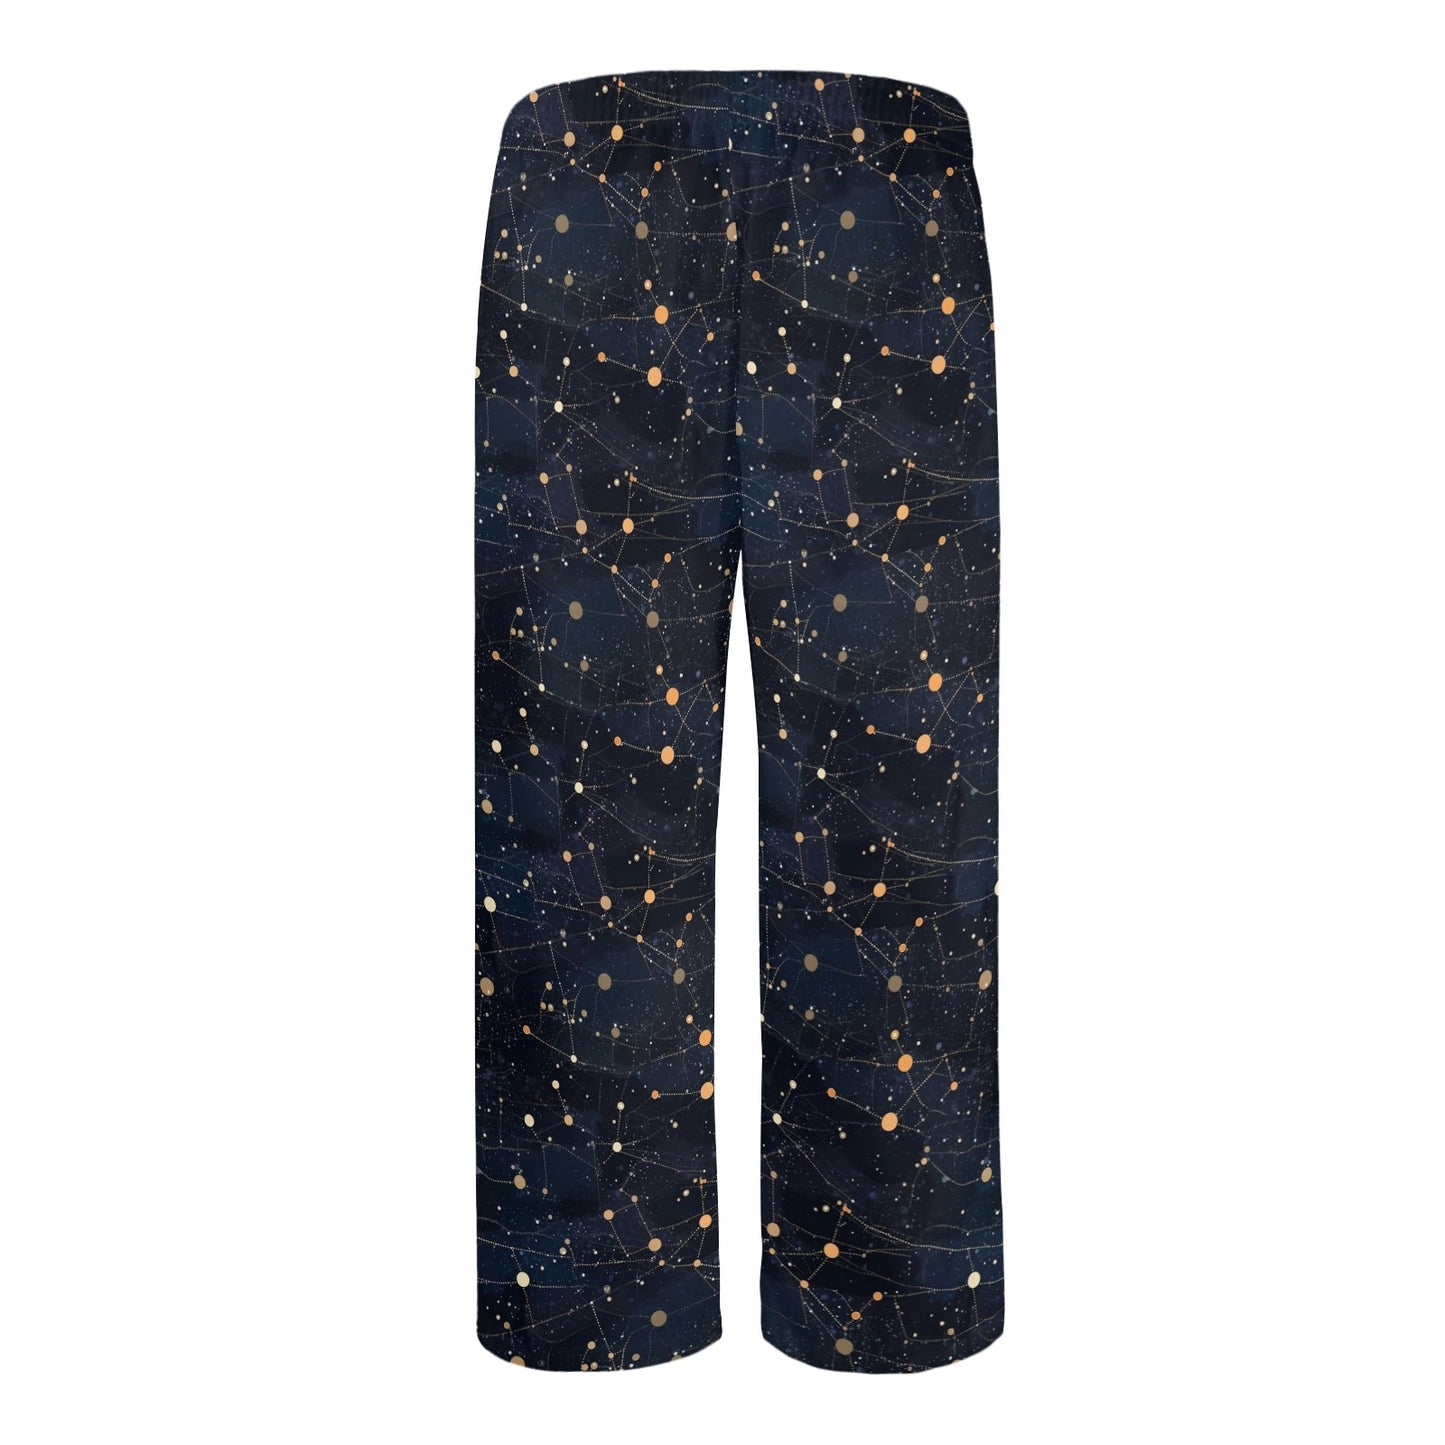 Constellation Men Pajamas Pants, Universe Cosmos Galaxy Space Dark Satin PJ Pockets Sleep Lounge Trousers Couples Matching Trousers Bottoms